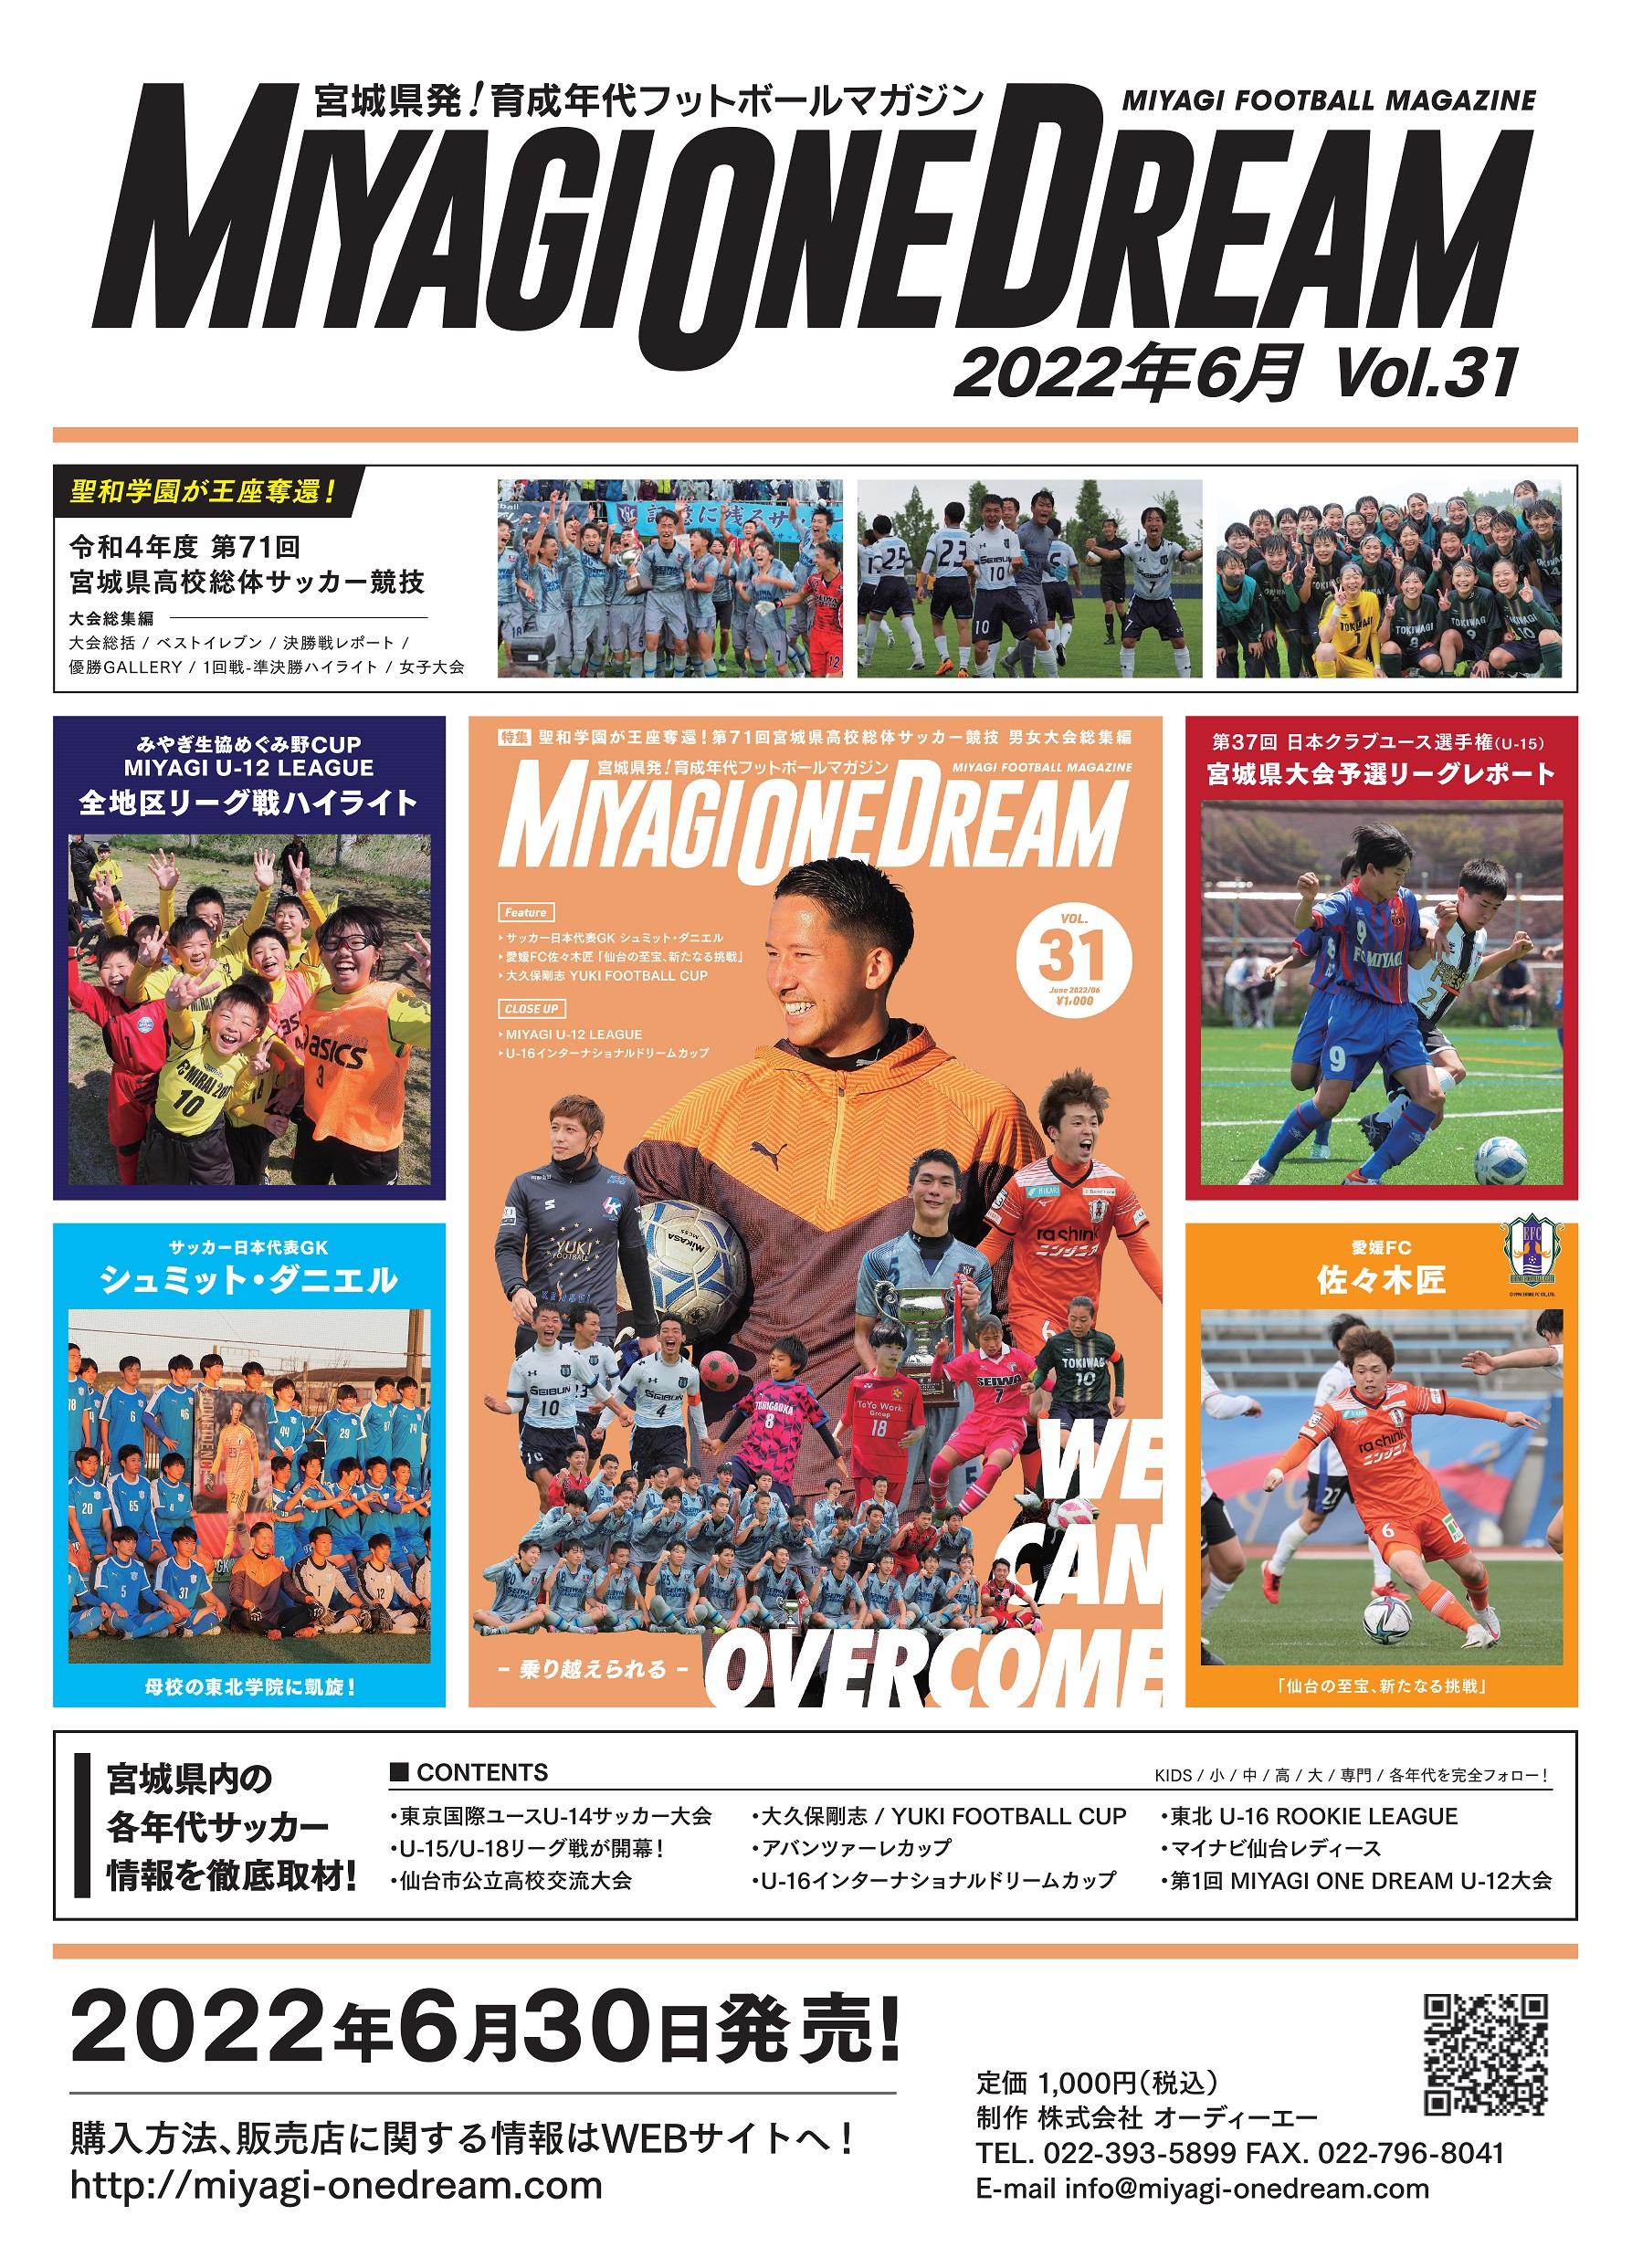 NEW！ MIYAGI ONE DREAM Vol.31 販売店舗に関するお知らせ！【6/30発売